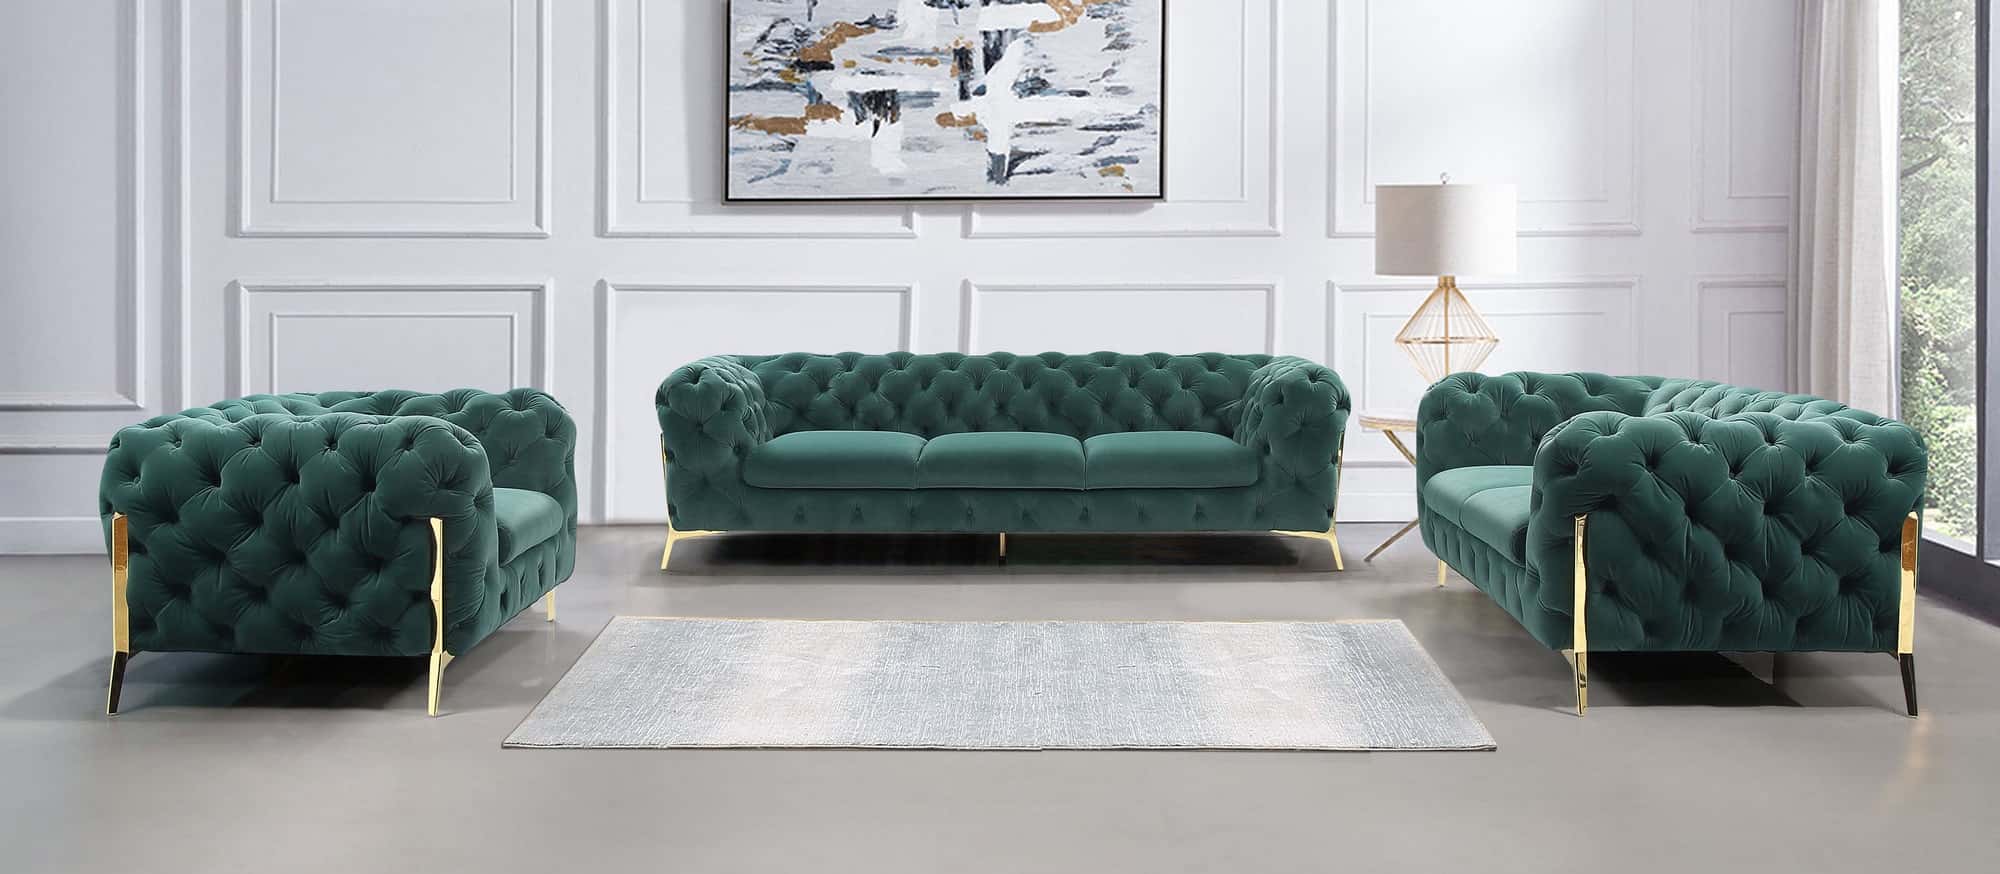 Divani Casa Sheila - Modern Emerald Green Fabric Sofa Set by VIG Furniture